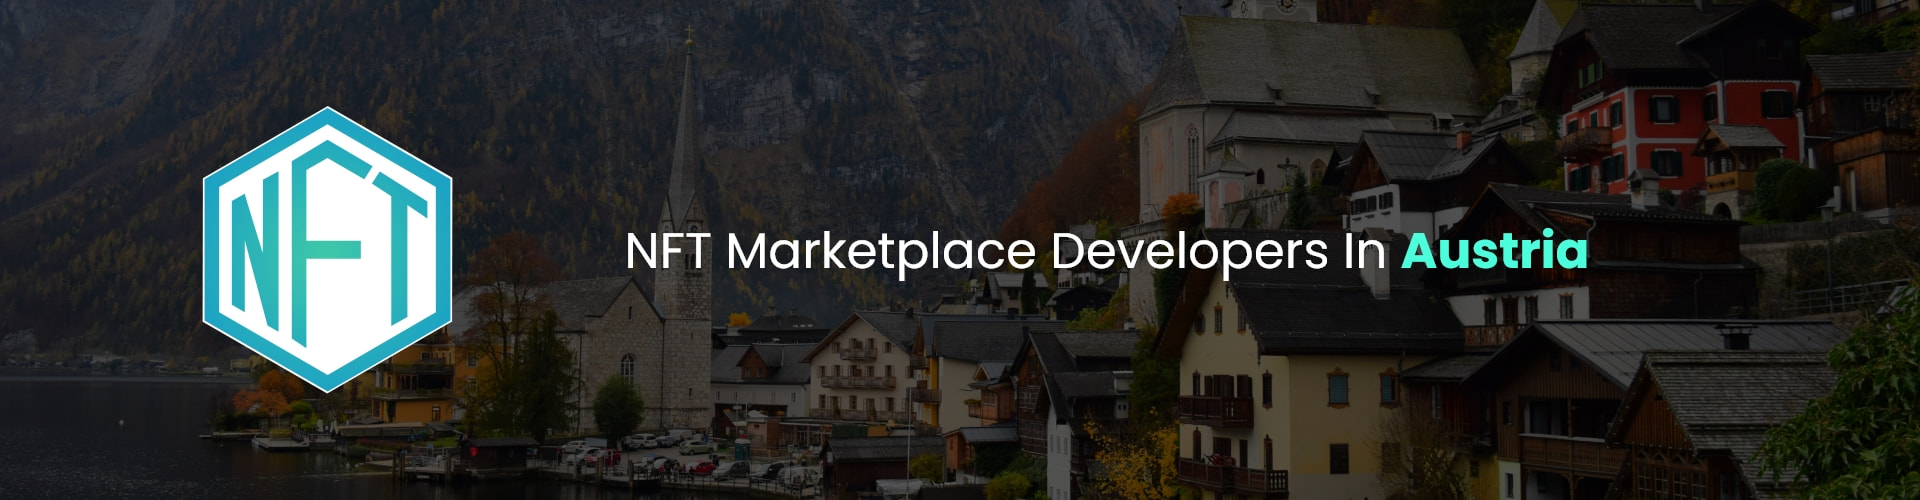 hire nft marketplace developers in Austria